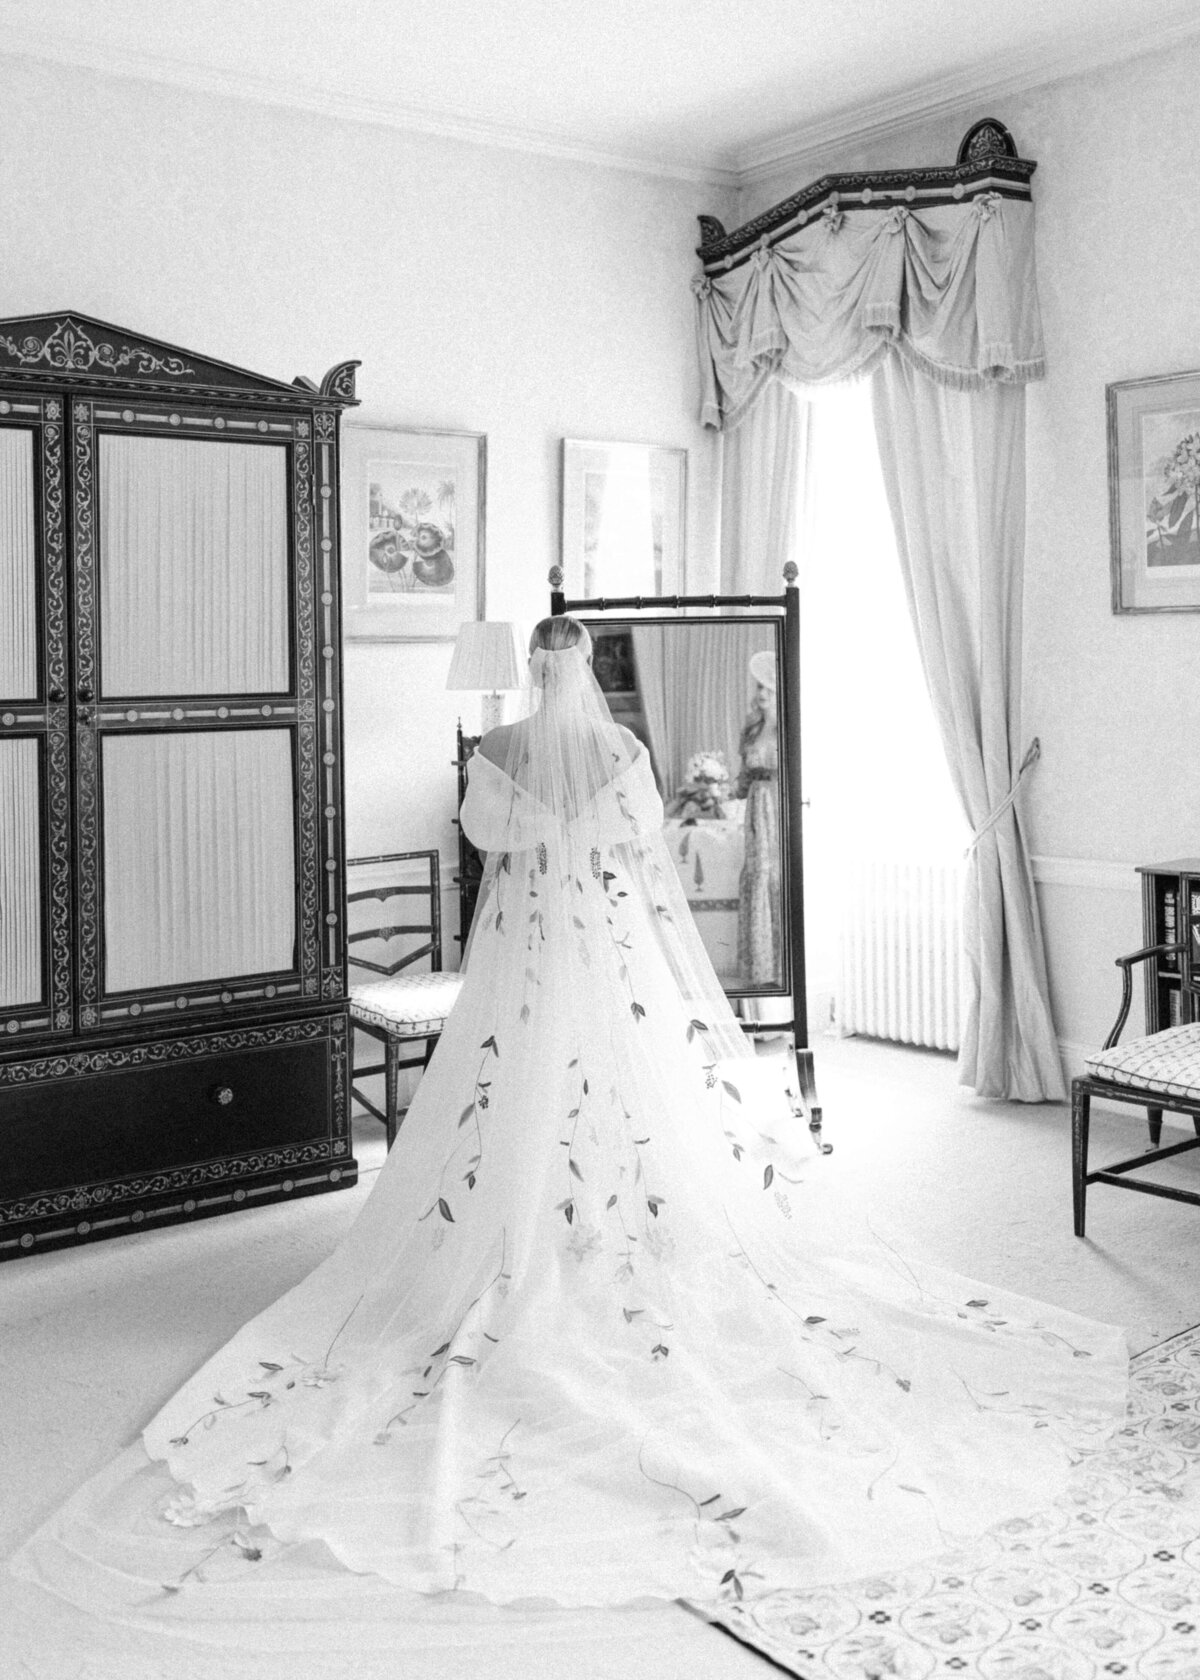 chloe-winstanley-weddings-cotswolds-cornwell-manor-monique-lhuillier-dress-toni-federici-veil-black-white